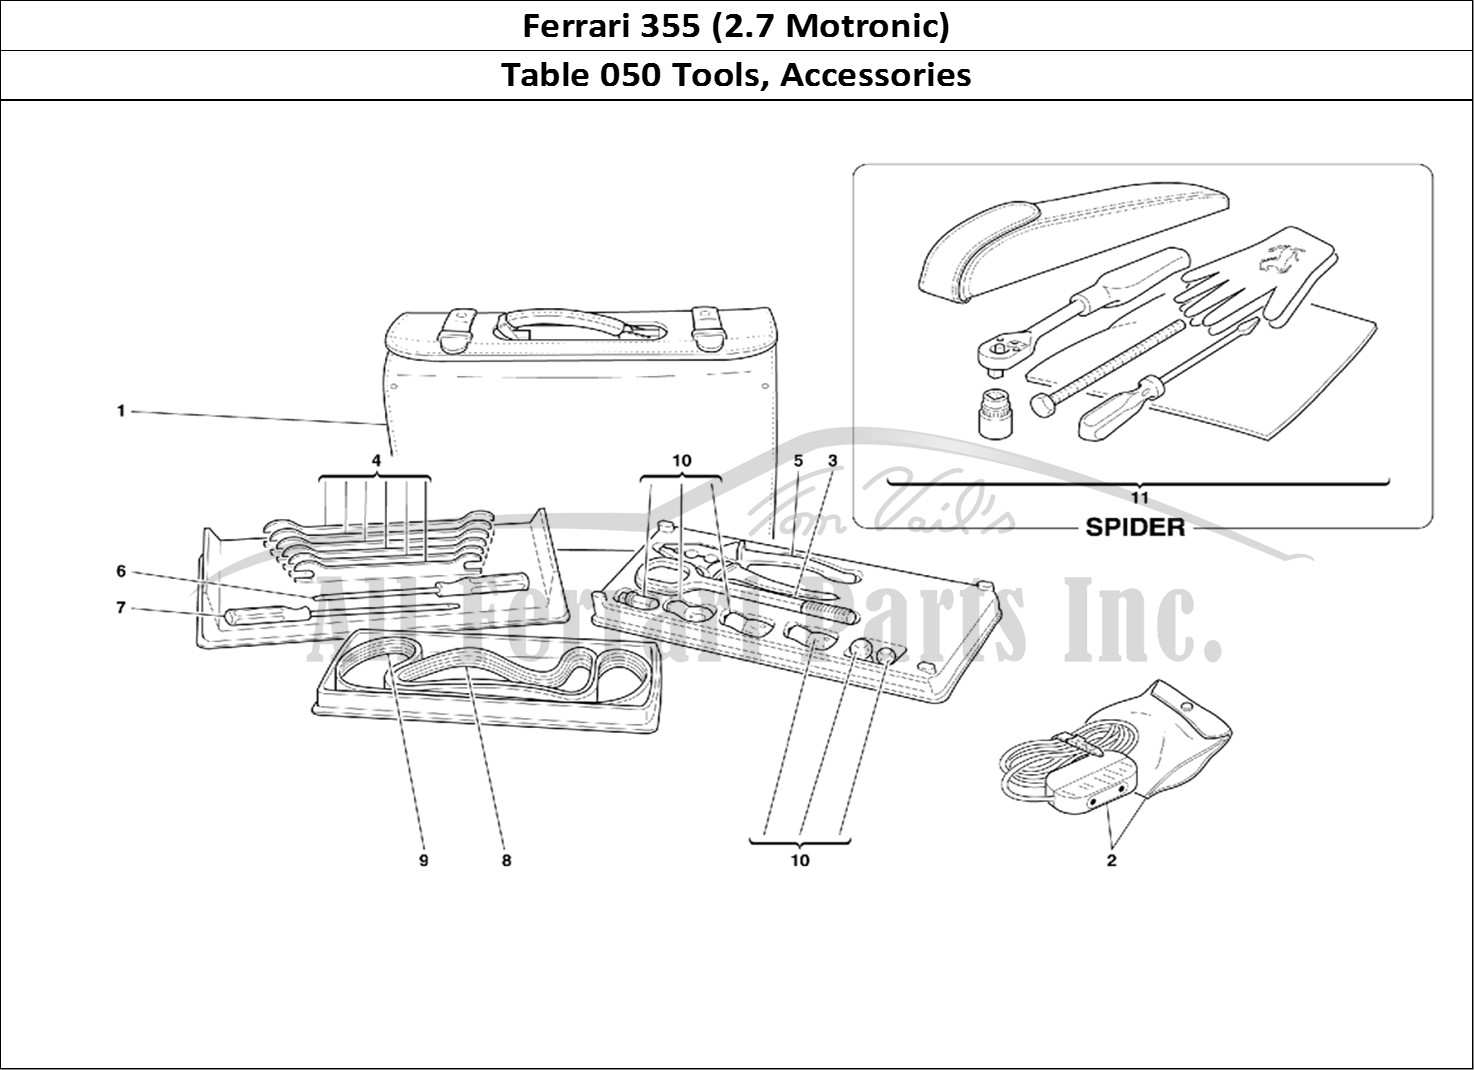 Ferrari Parts Ferrari 355 (2.7 Motronic) Page 050 Tools Equipment